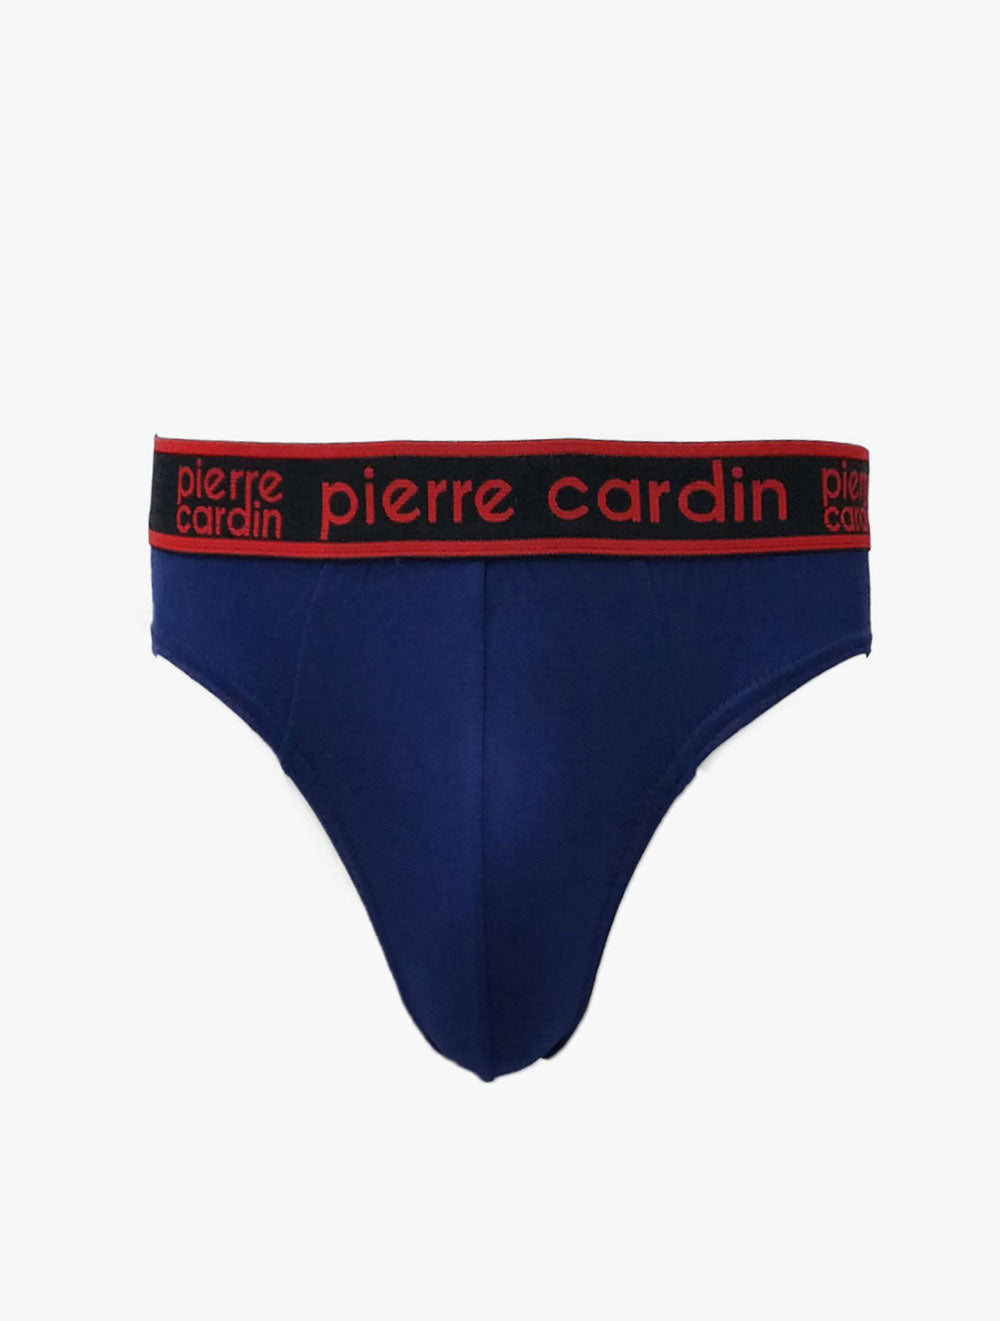 PIERRE CARDIN BRIEF - PC1026-3